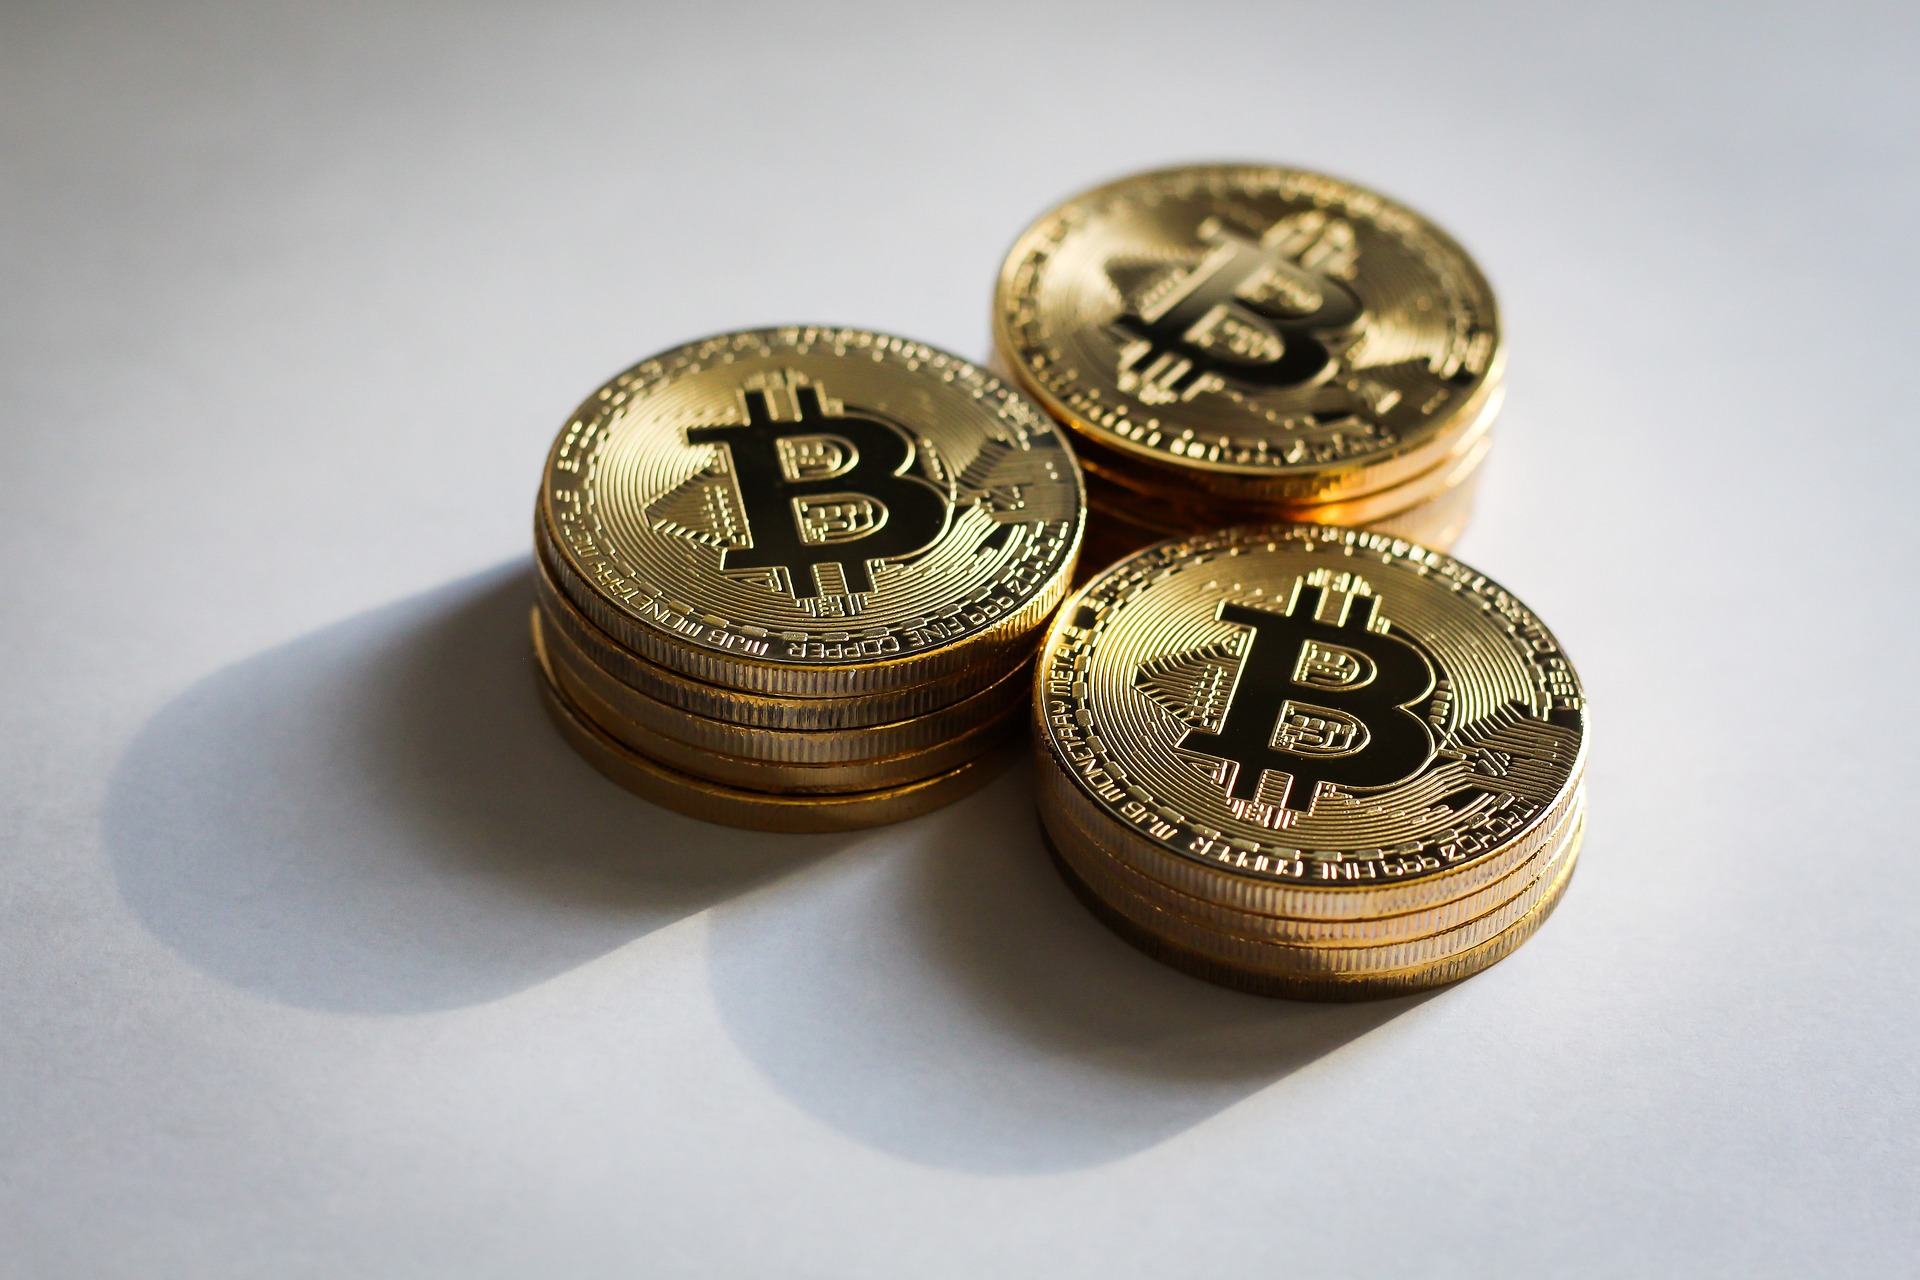 3 stacks of bitcoin coins